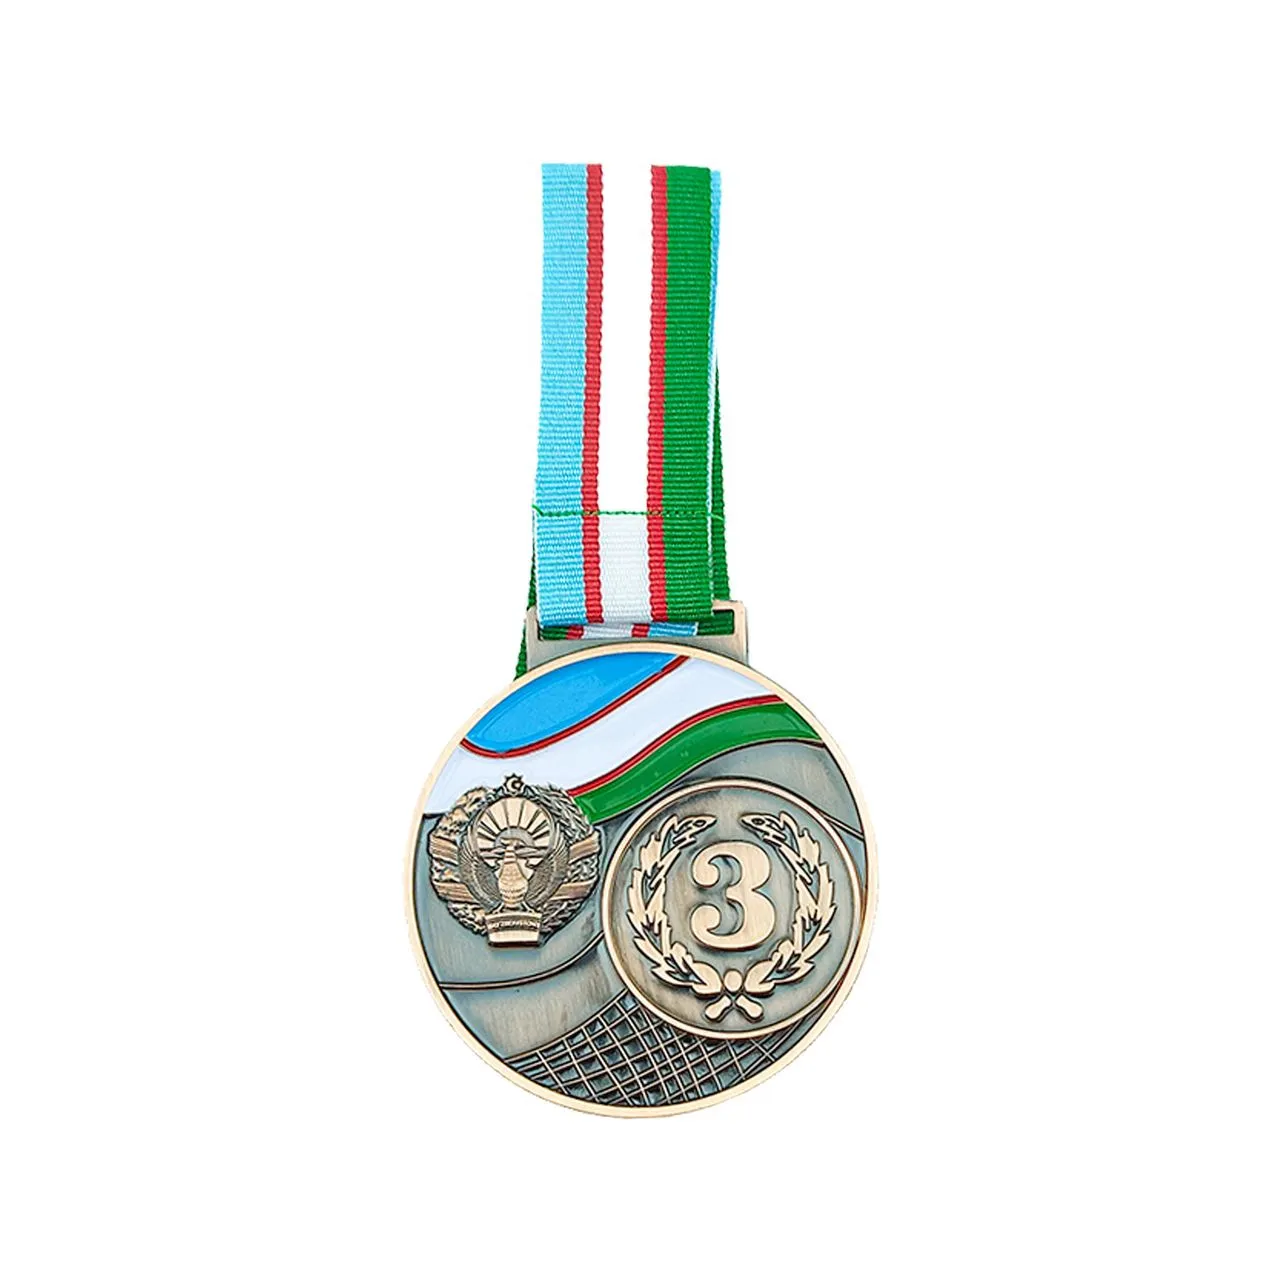 O'ZBEKISTON medali gerbli, bronza#1